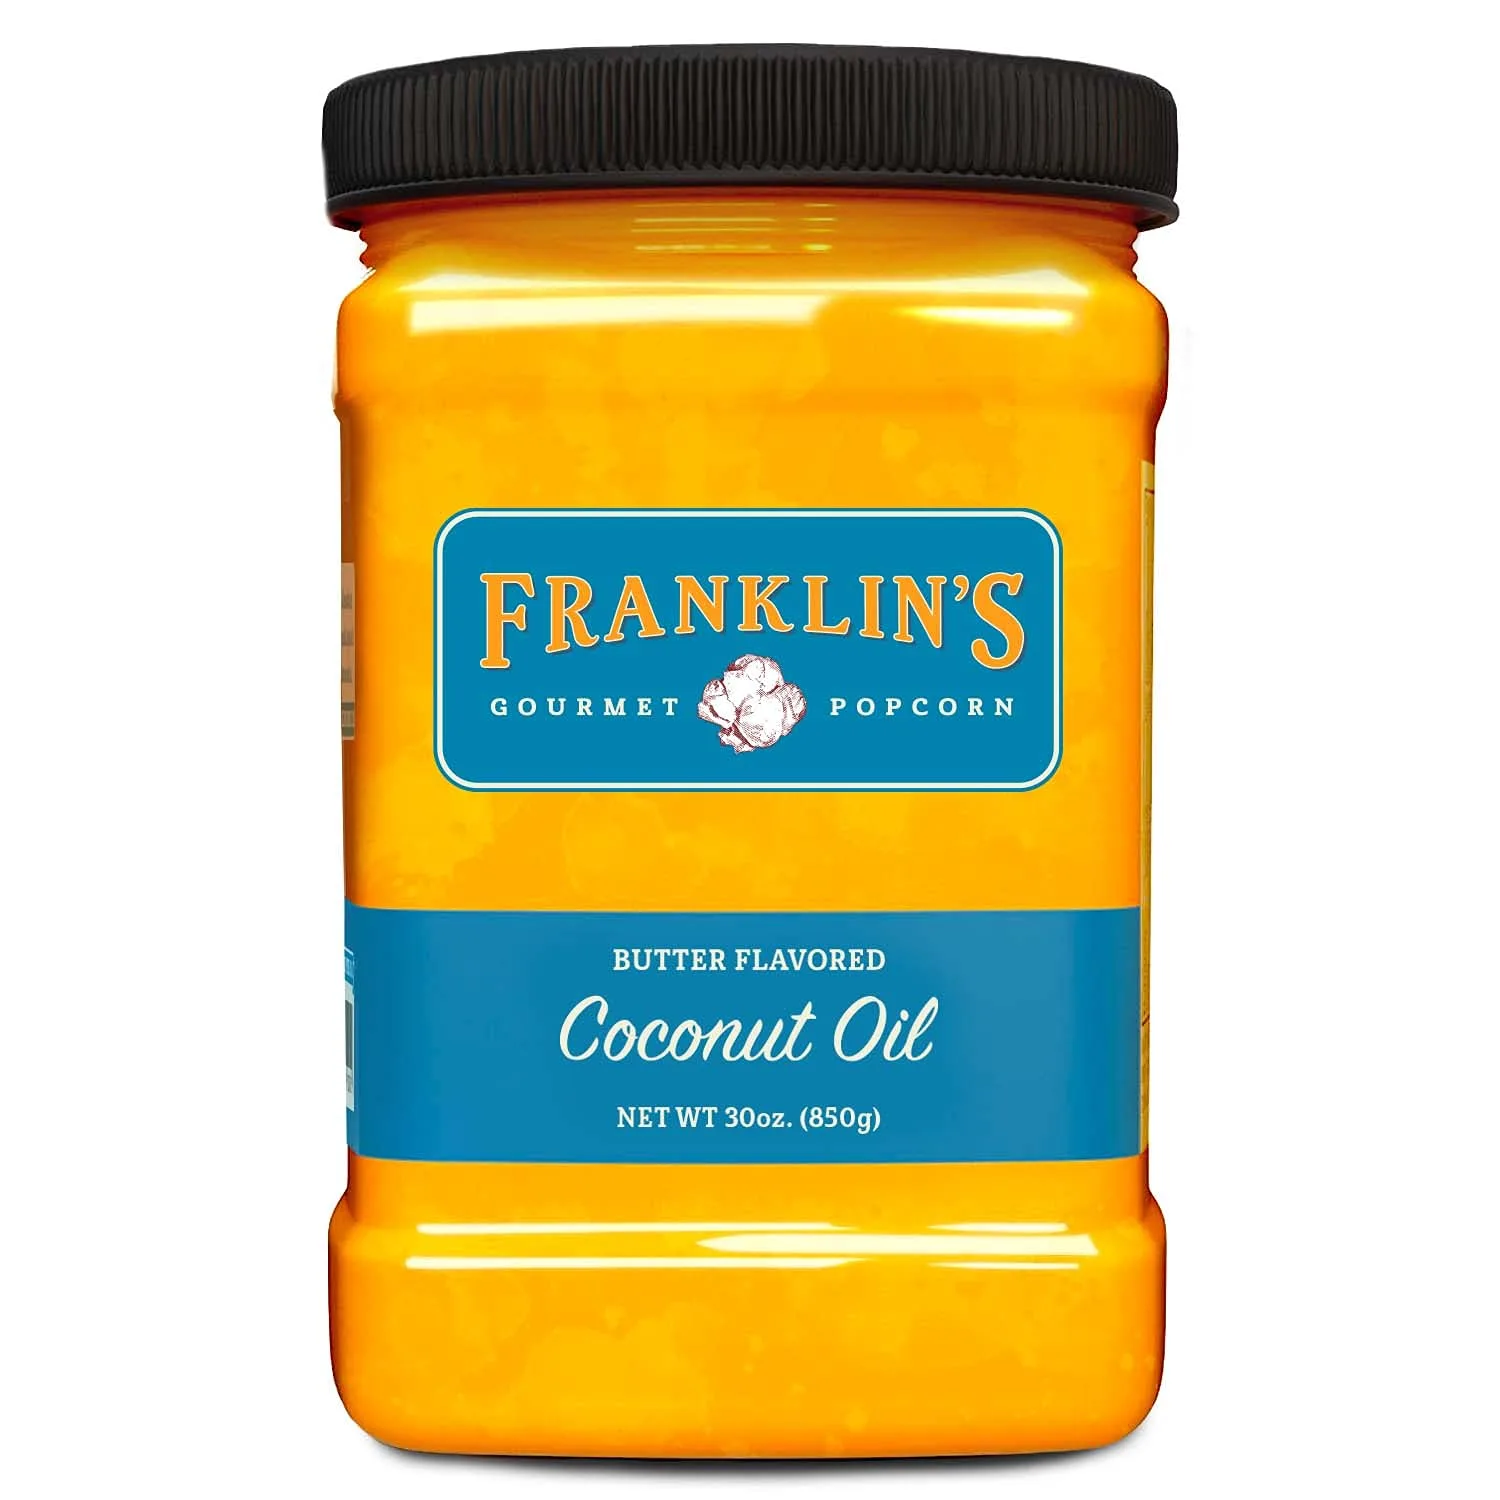 Franklin’s Gourmet Popcorn Butter Flavored Coconut Oil